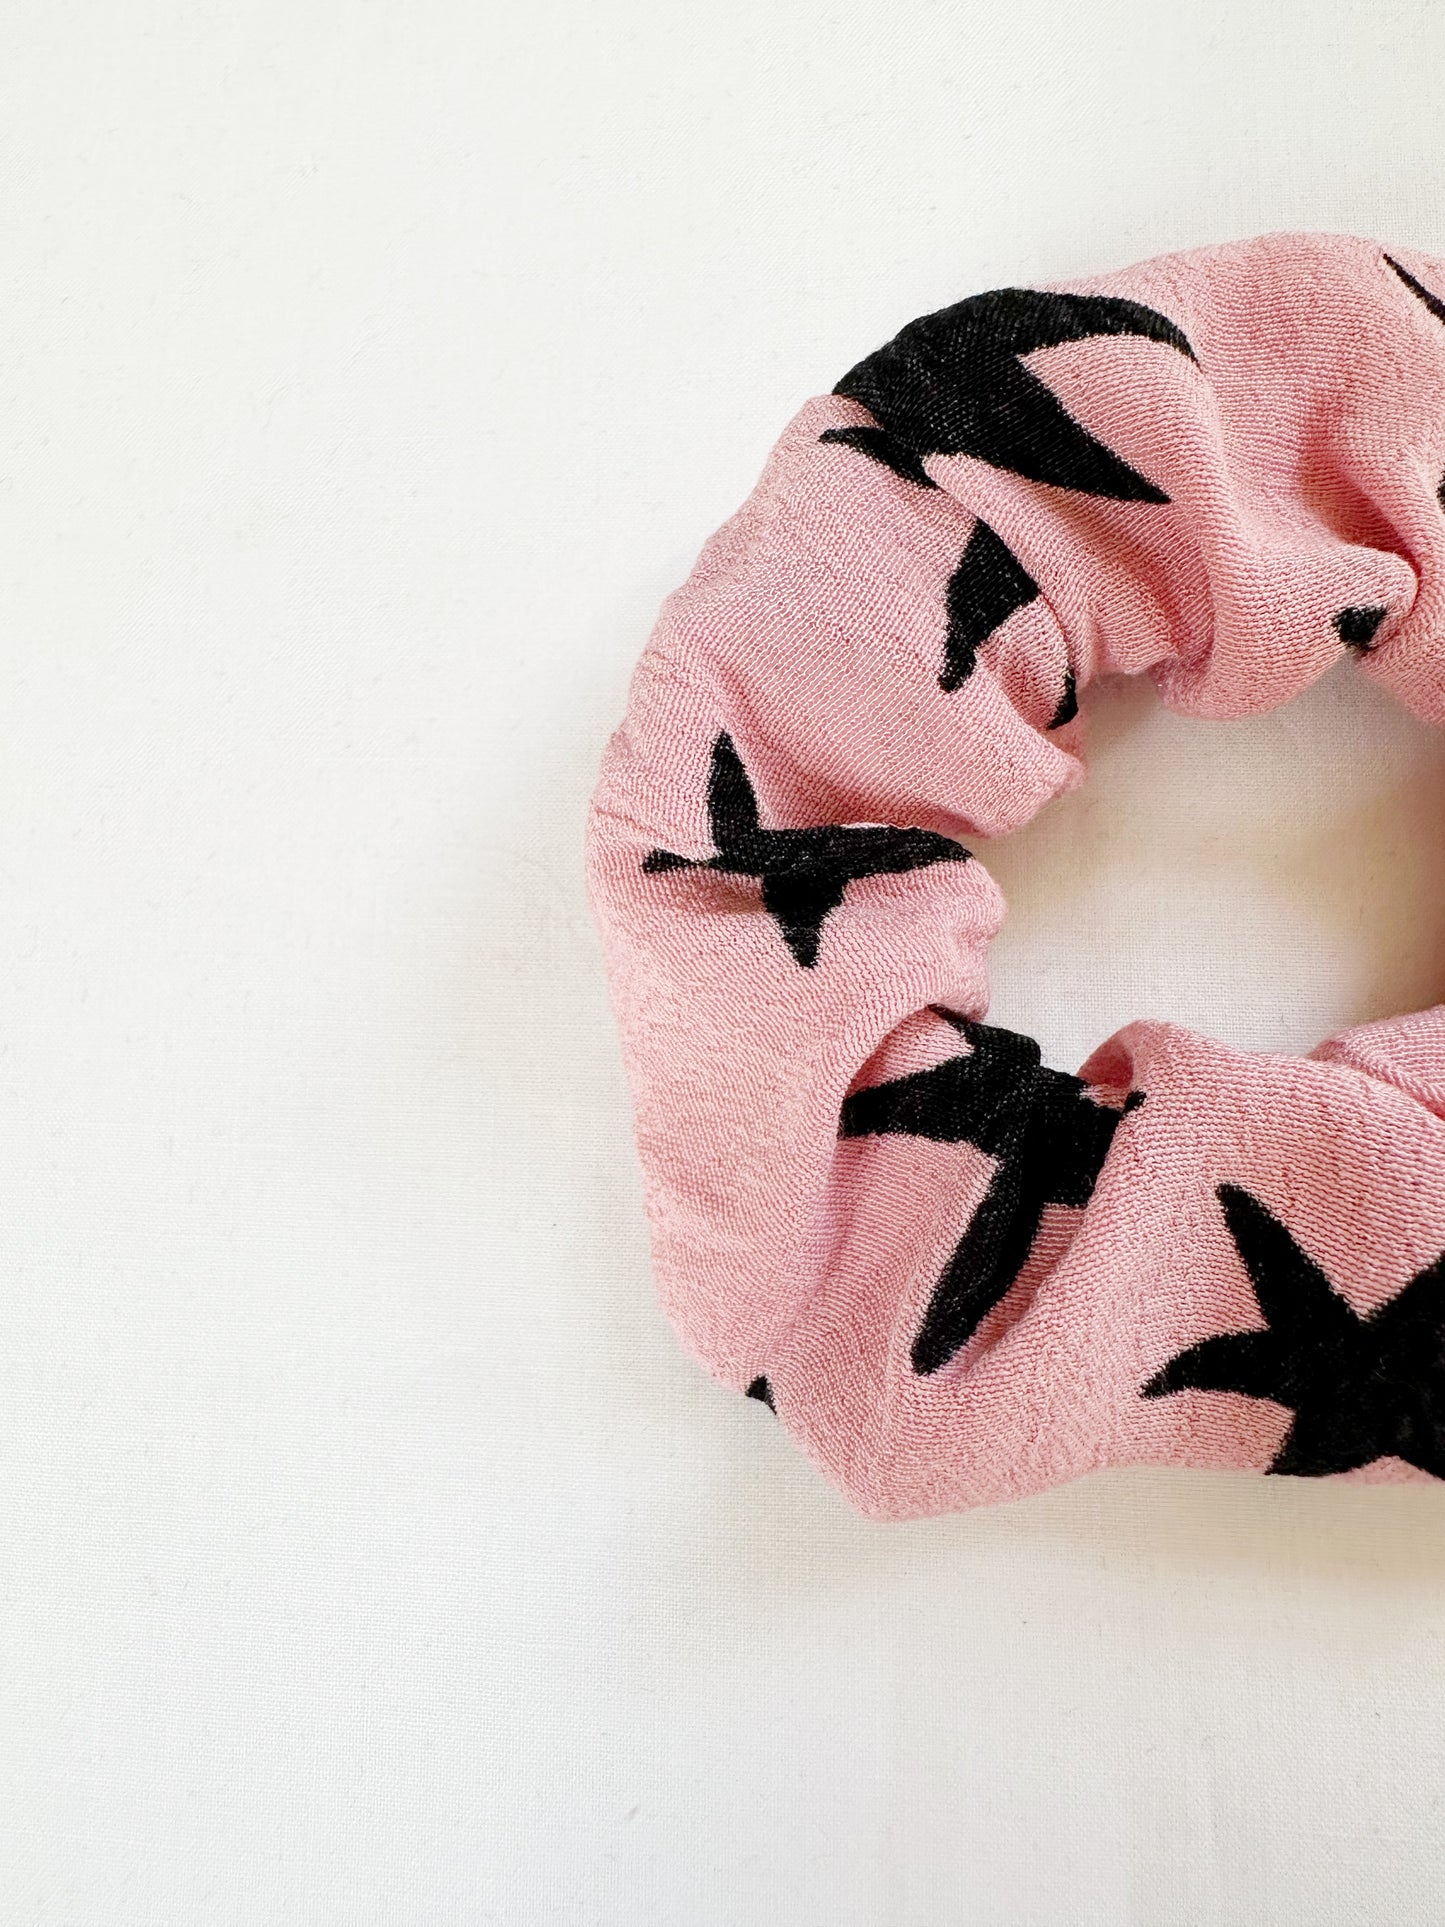 Mini scrunchie in pink and black star print